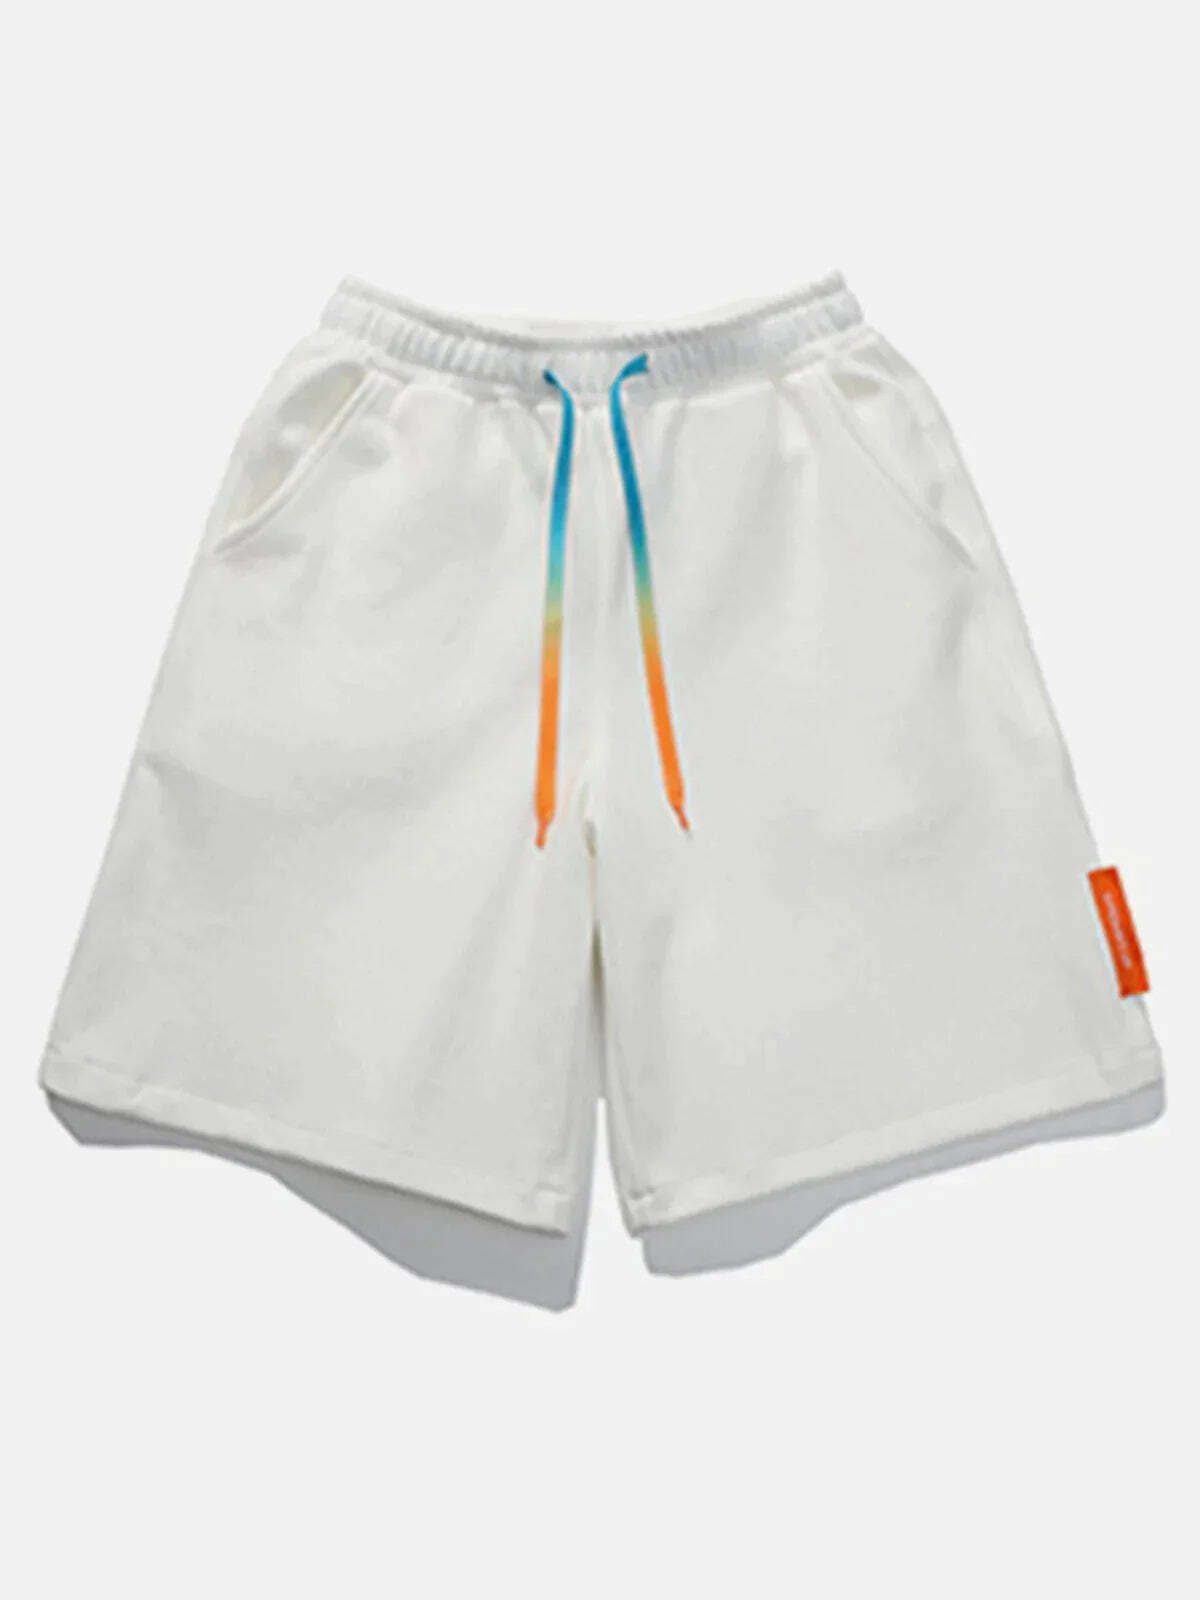 colored drawstring shorts youthful & custom design 3605